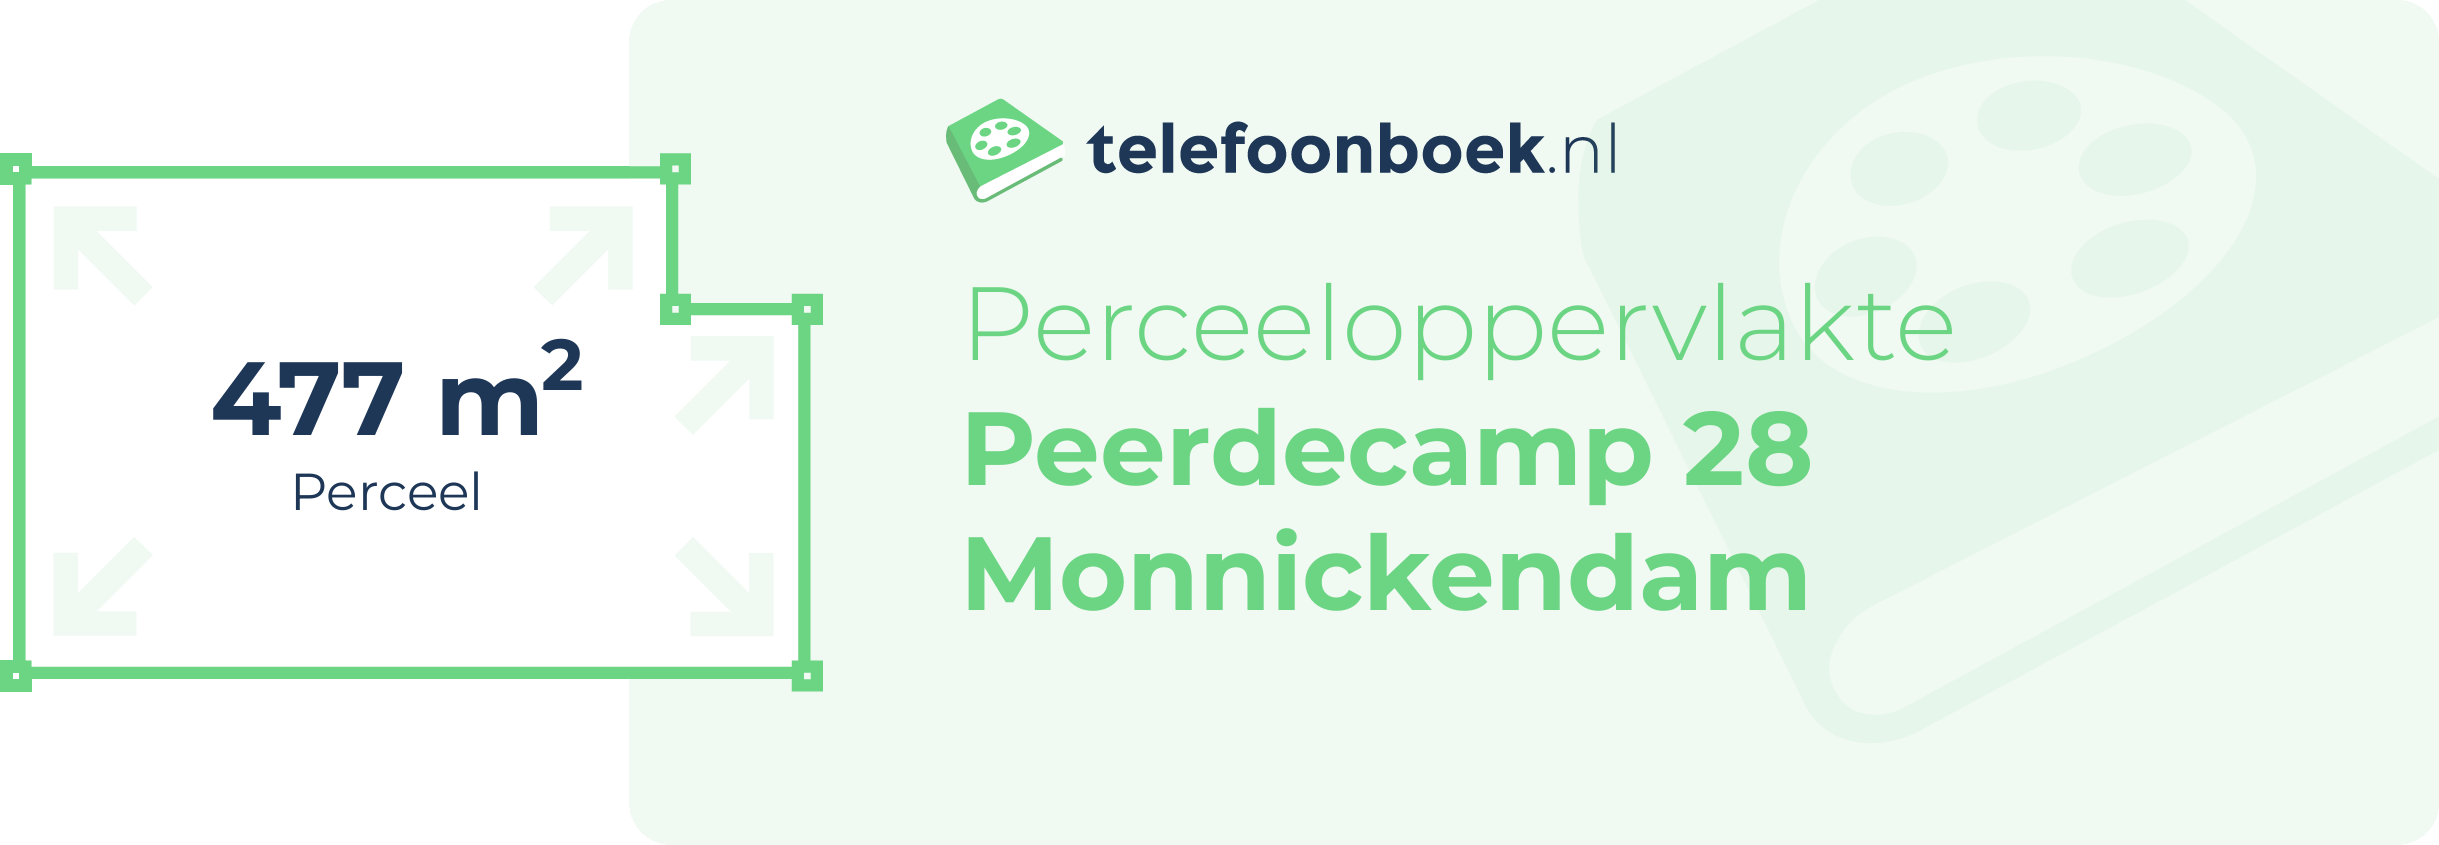 Perceeloppervlakte Peerdecamp 28 Monnickendam